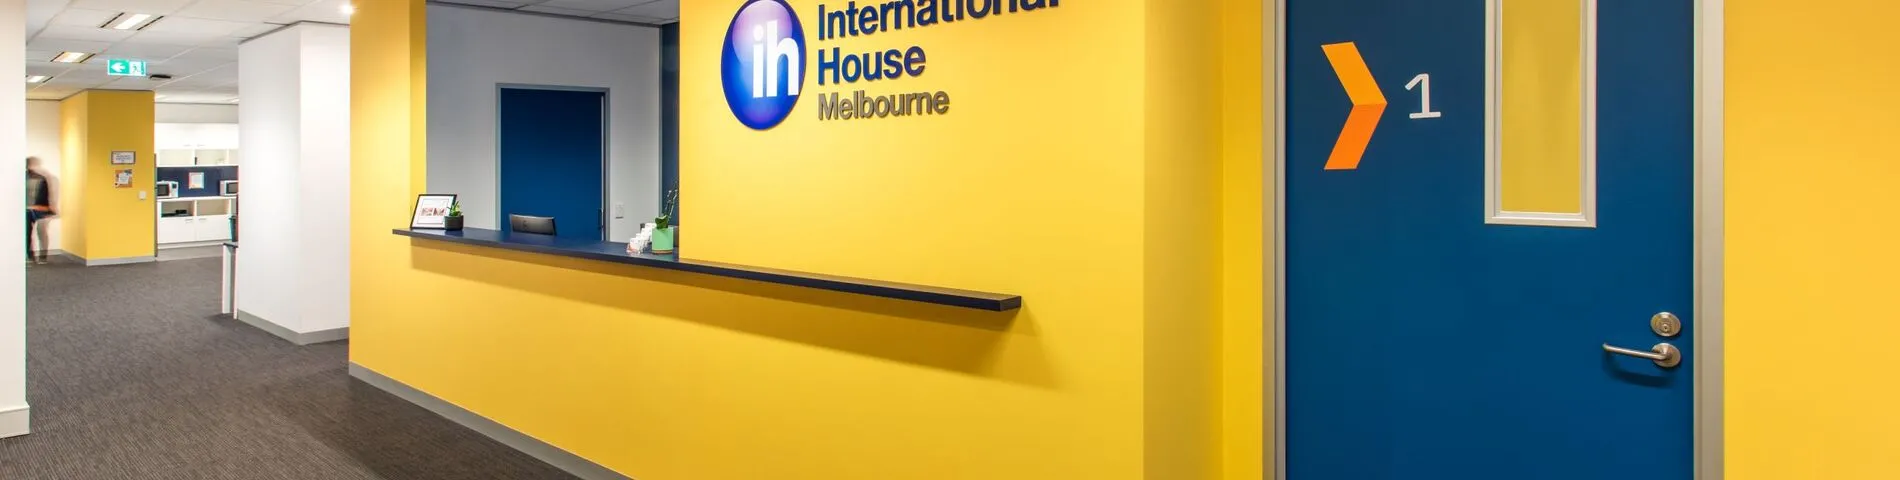 International House immagine 1